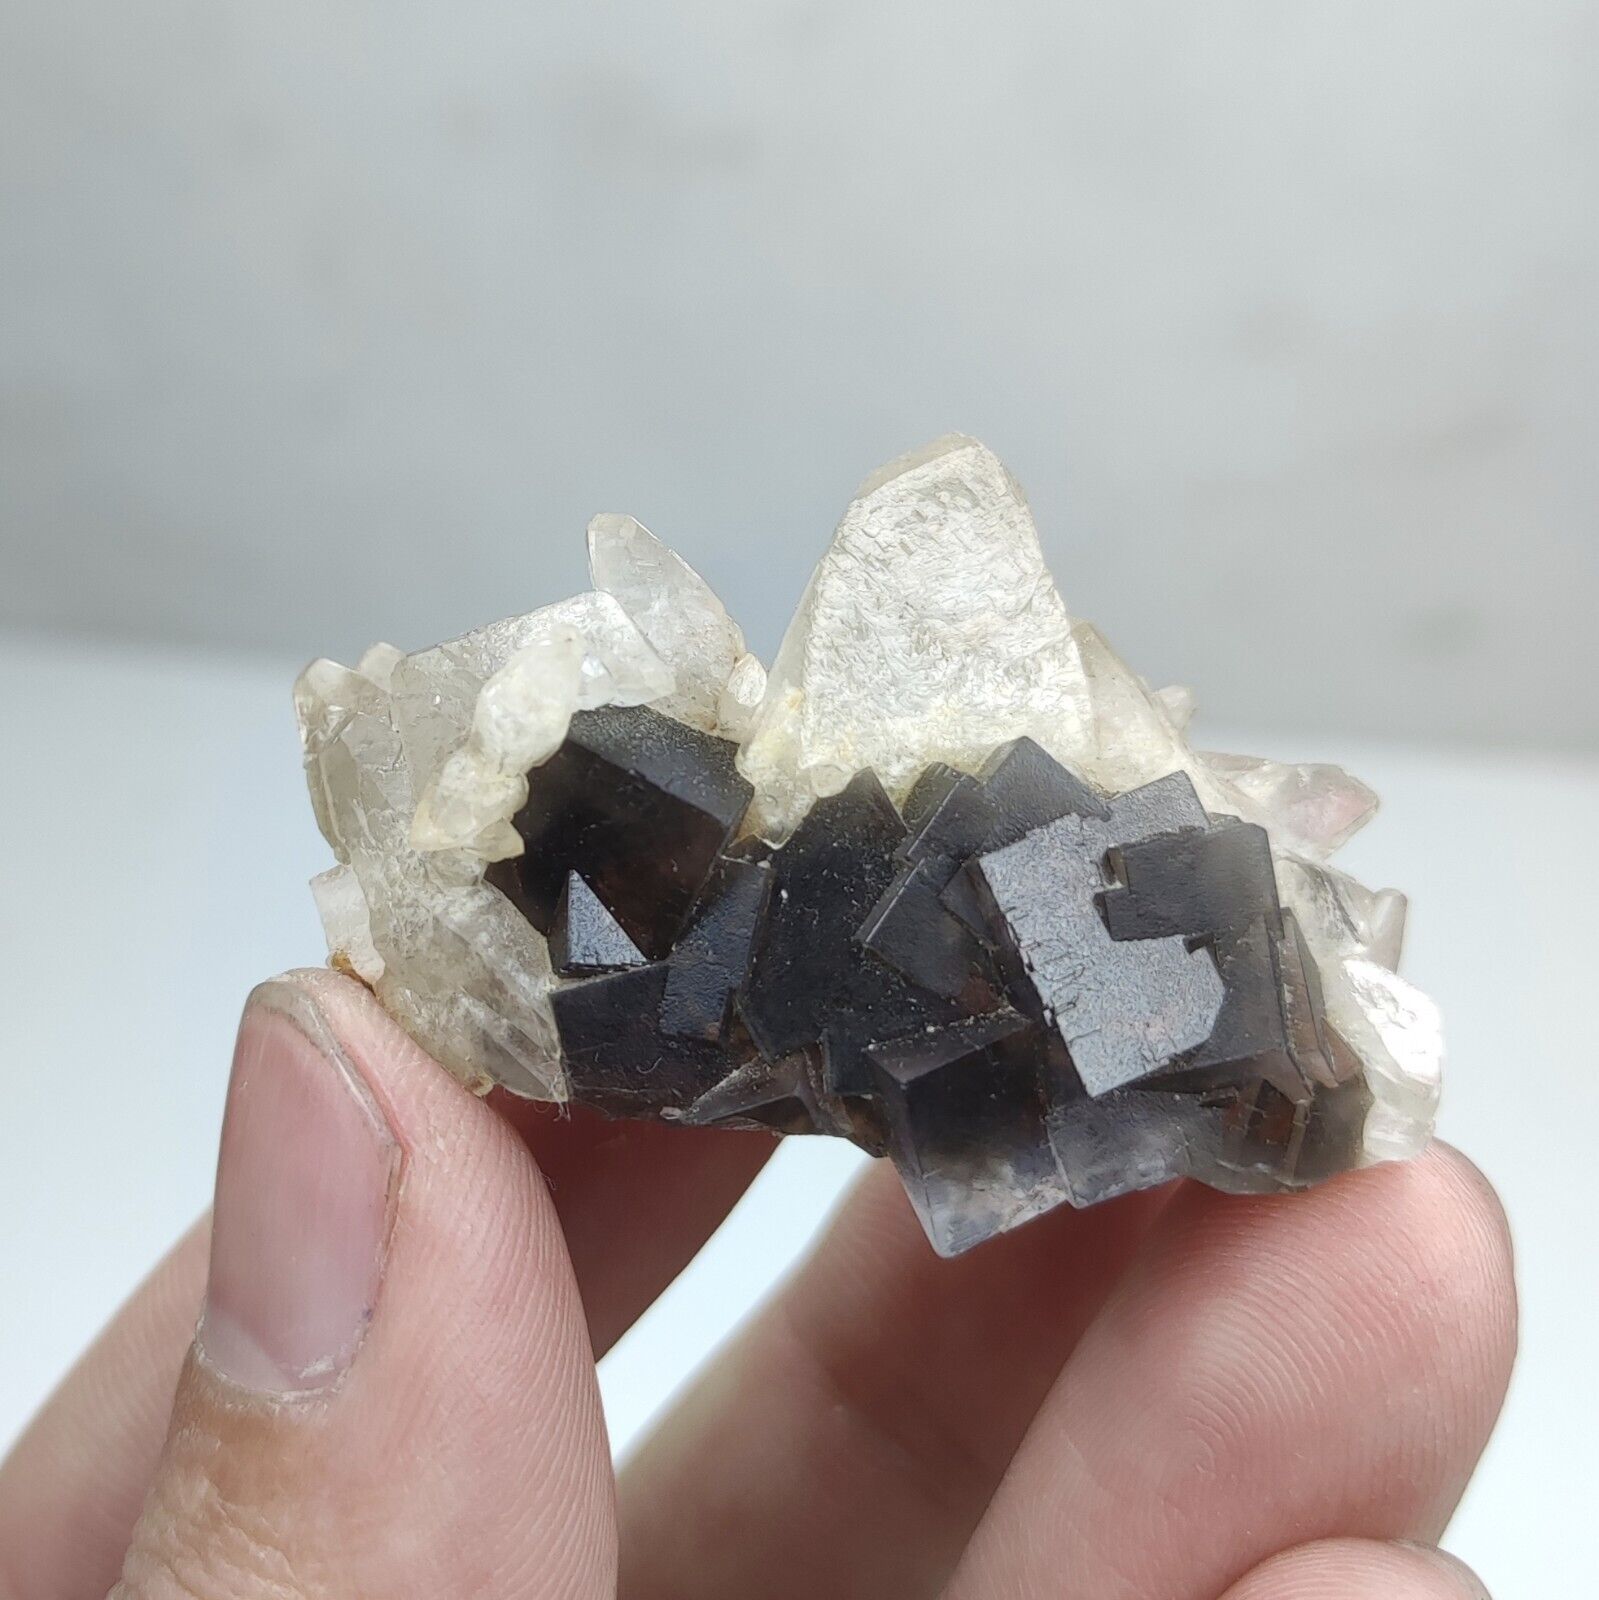 Aesthetic Dark Grey Phantom Fluorite Crystal With Dogtooth Calcite Matrix, 25g